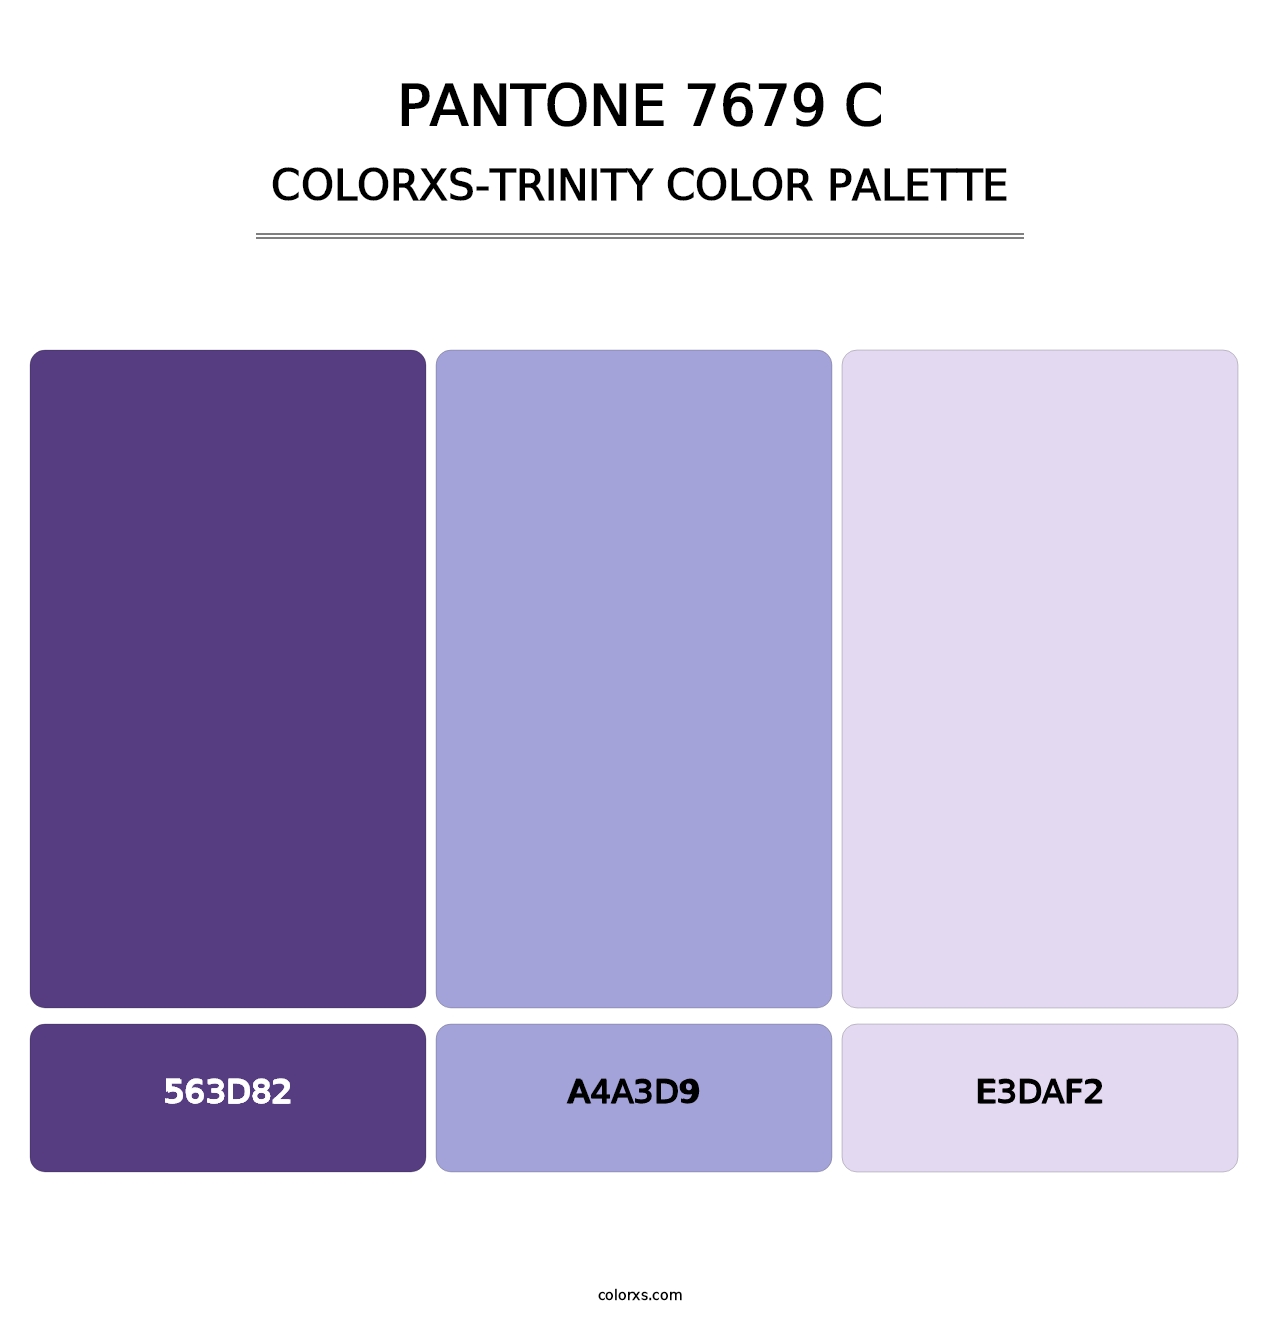 PANTONE 7679 C - Colorxs Trinity Palette